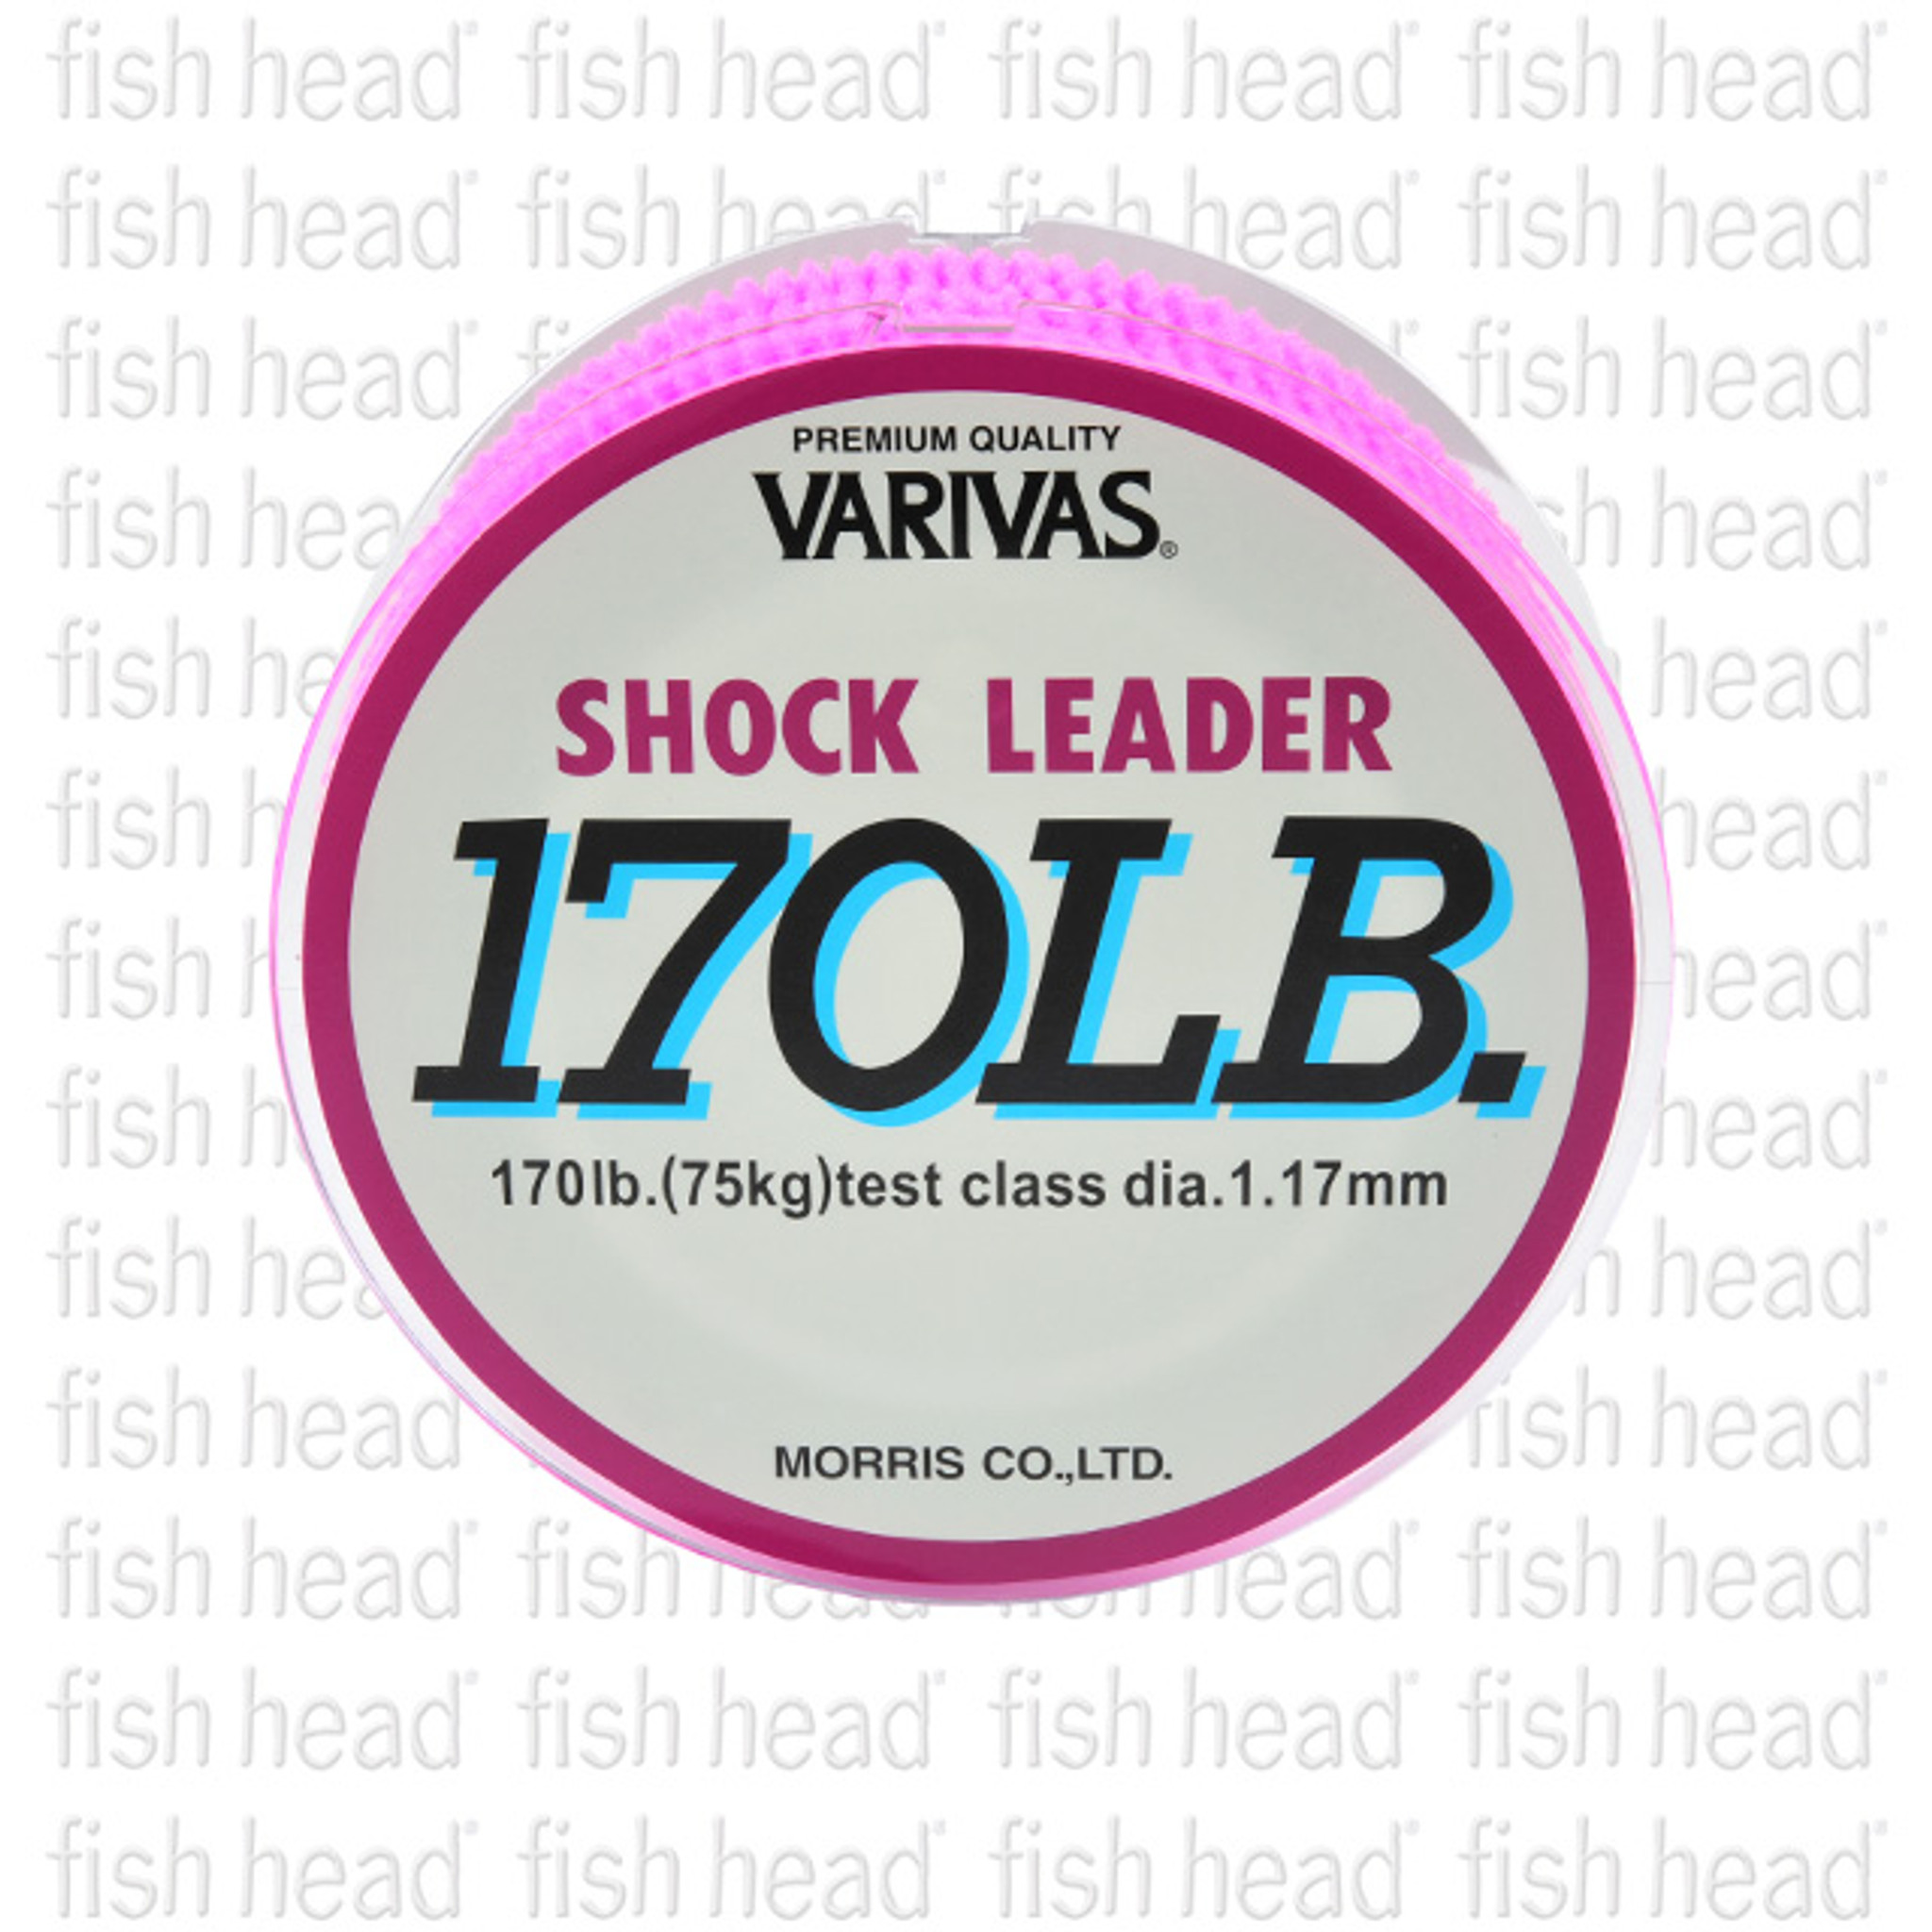 Varivas Shock Leader - Fish Head